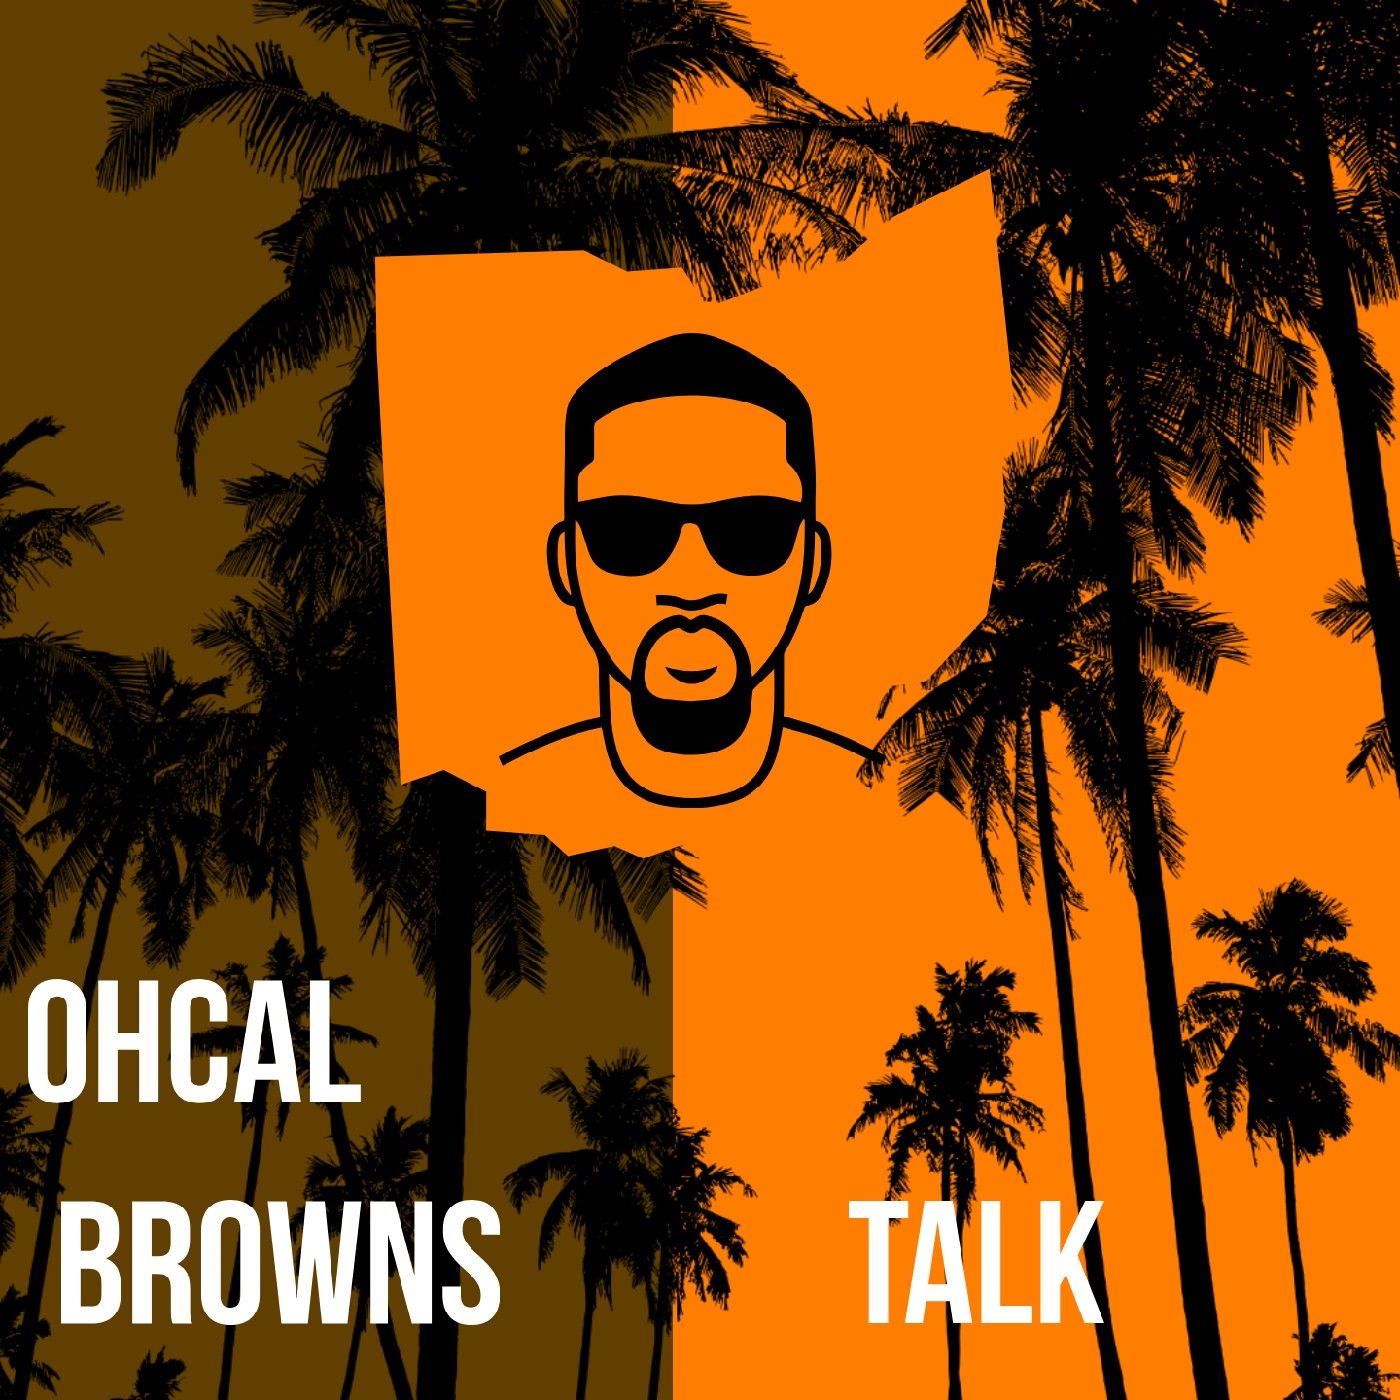 Brown Vs 49ers - OHCal BROWNS TALK